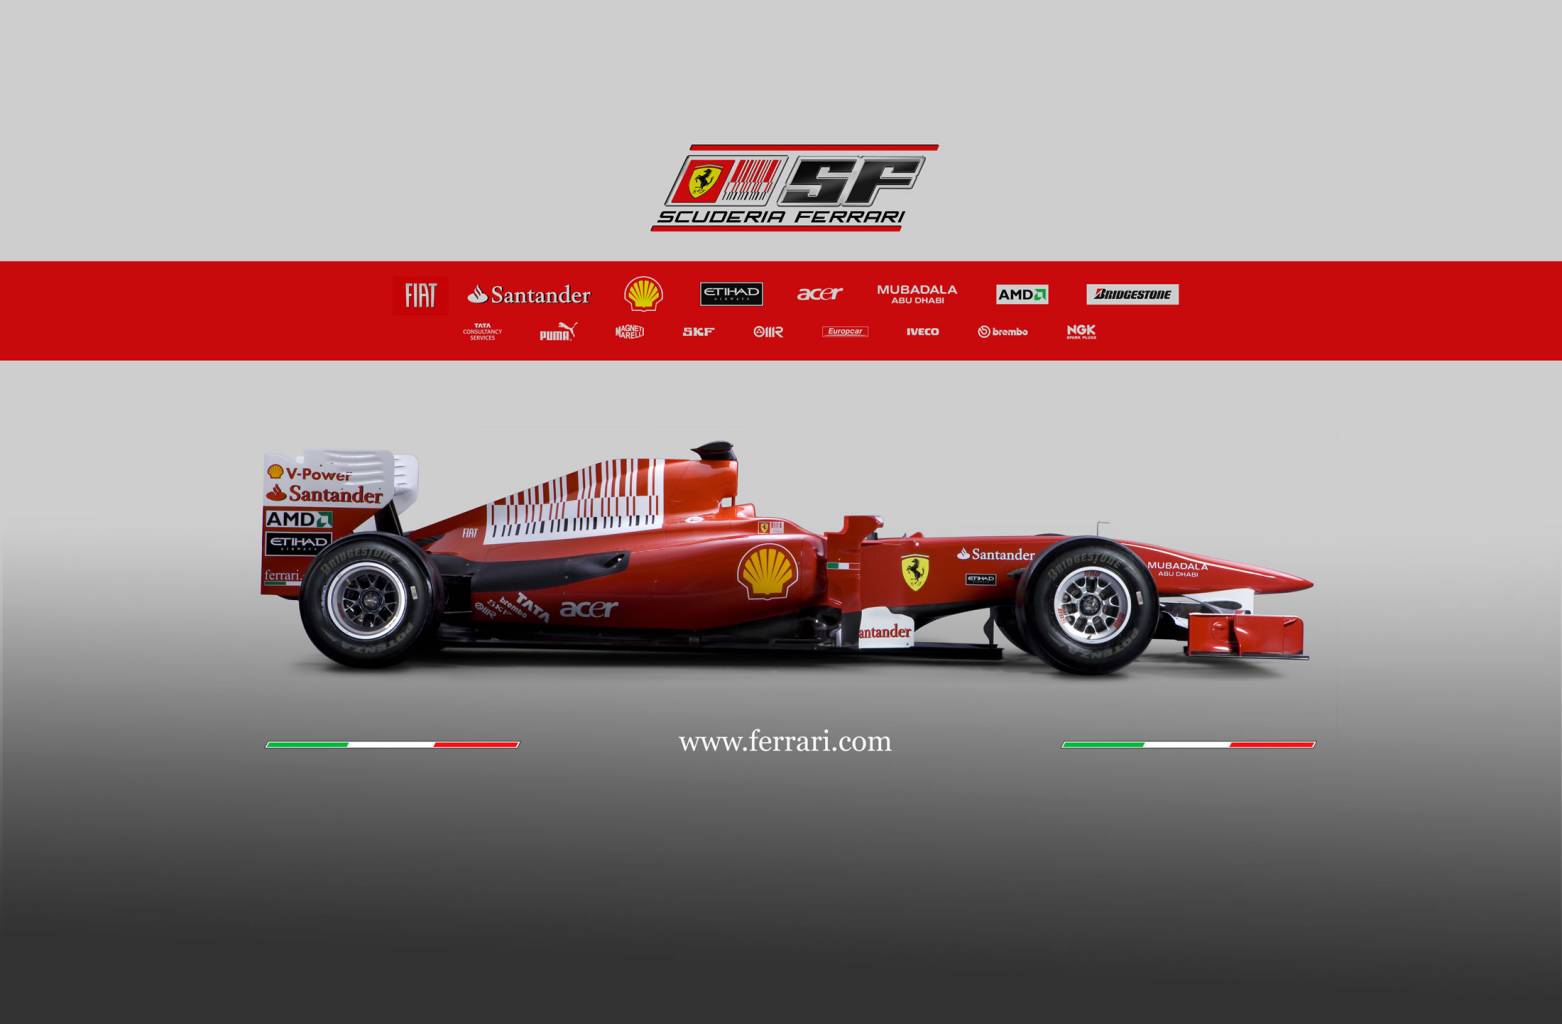 Ferrari Pictures To Print Johnywheels